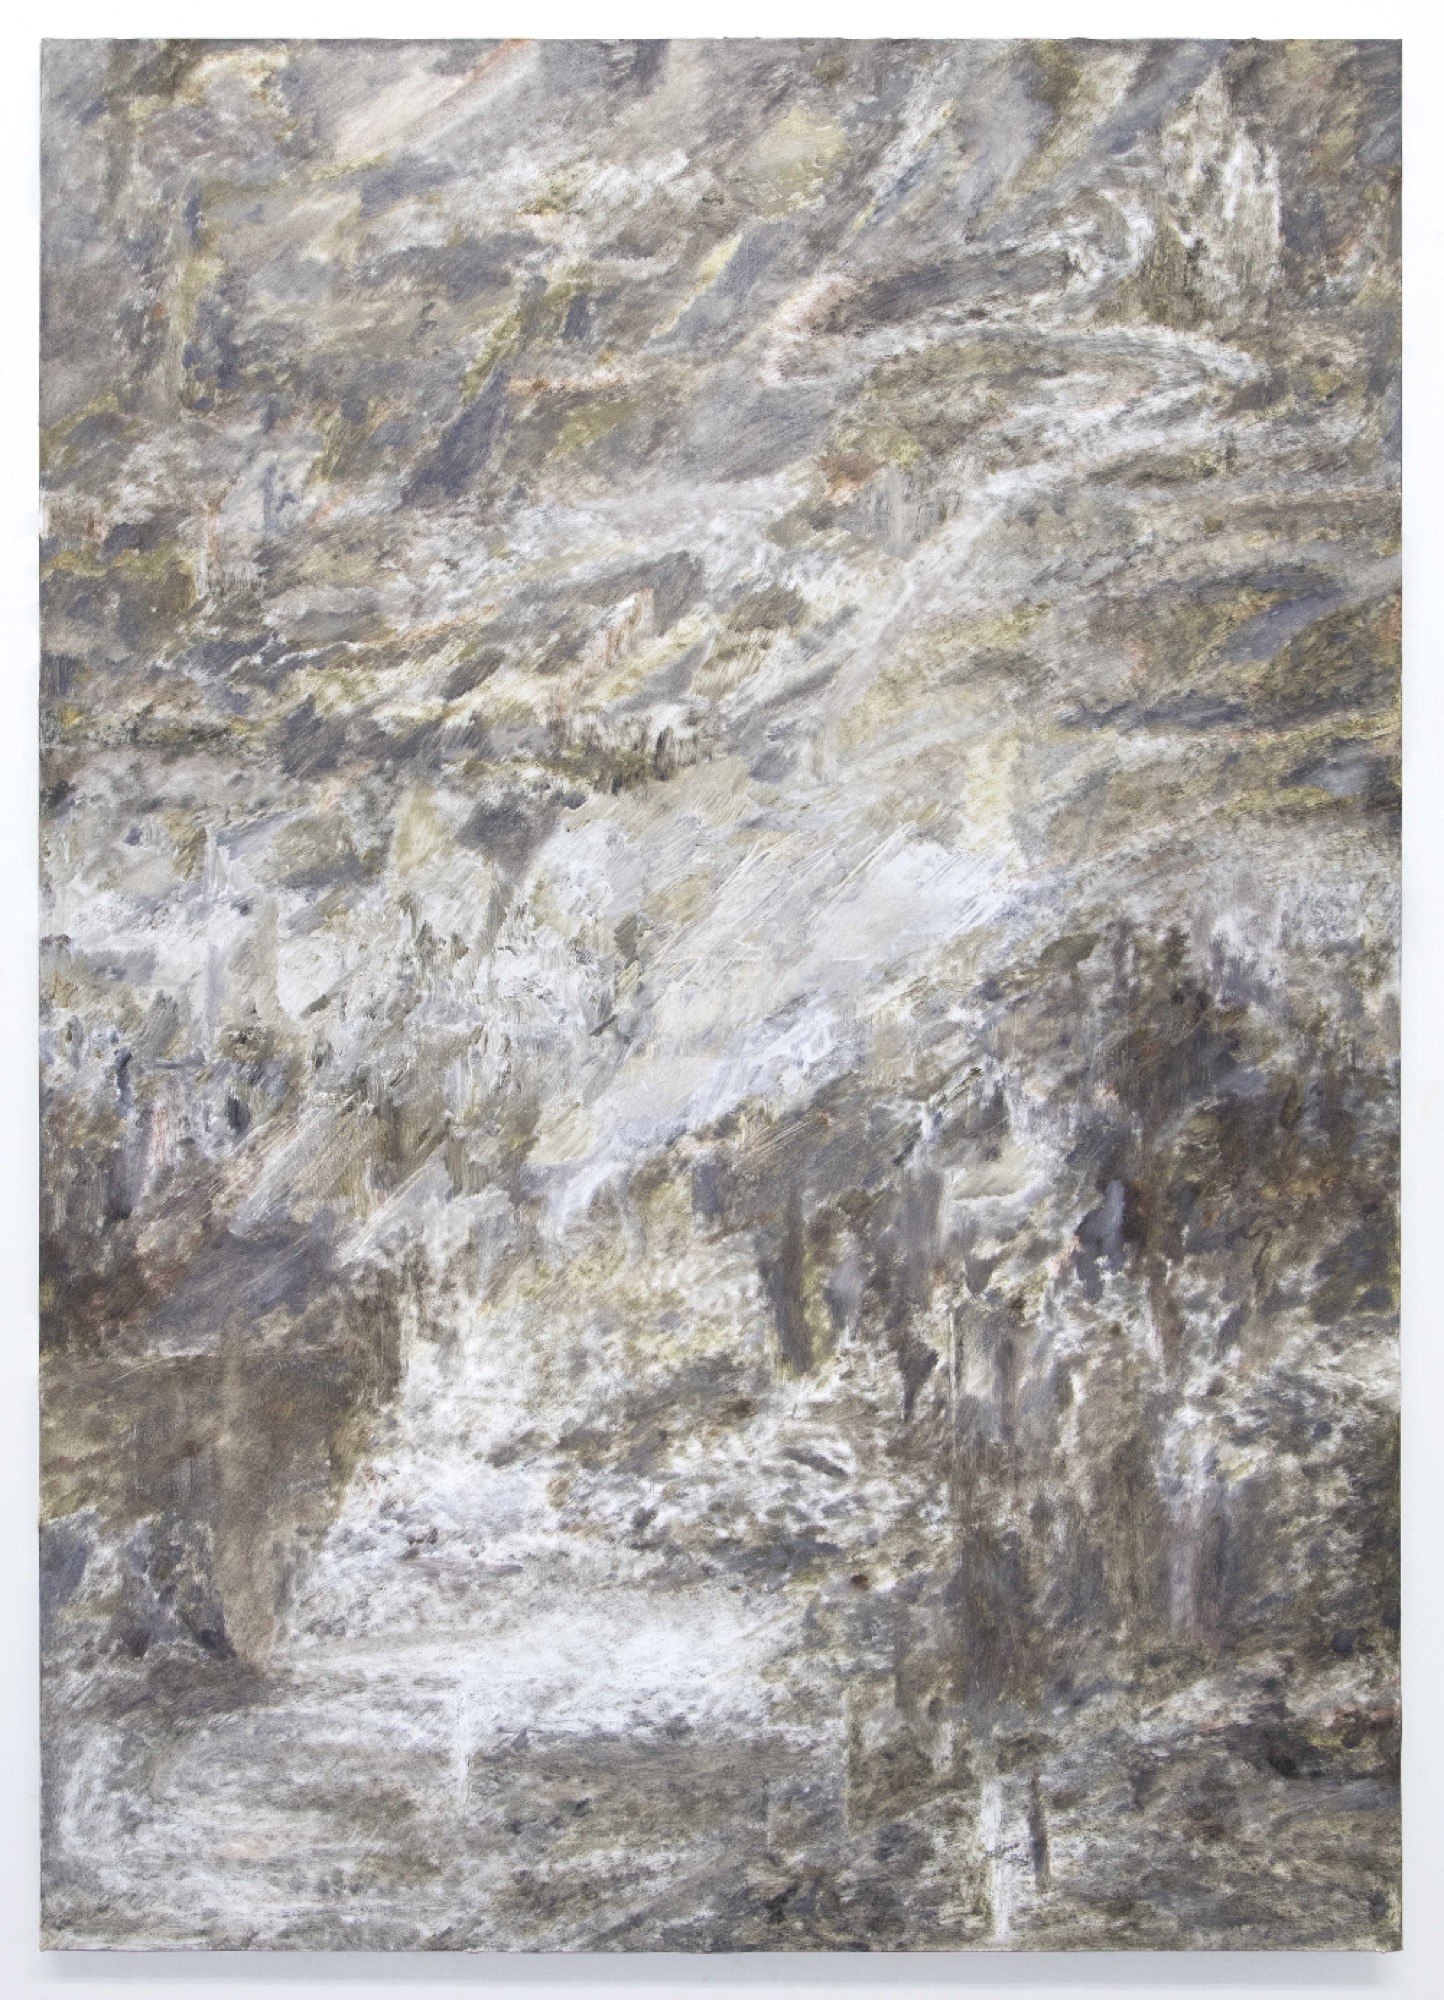 Tim Bučković, <em>Untitled</em>, 2017, oil on linen, 122 x 86 cm.